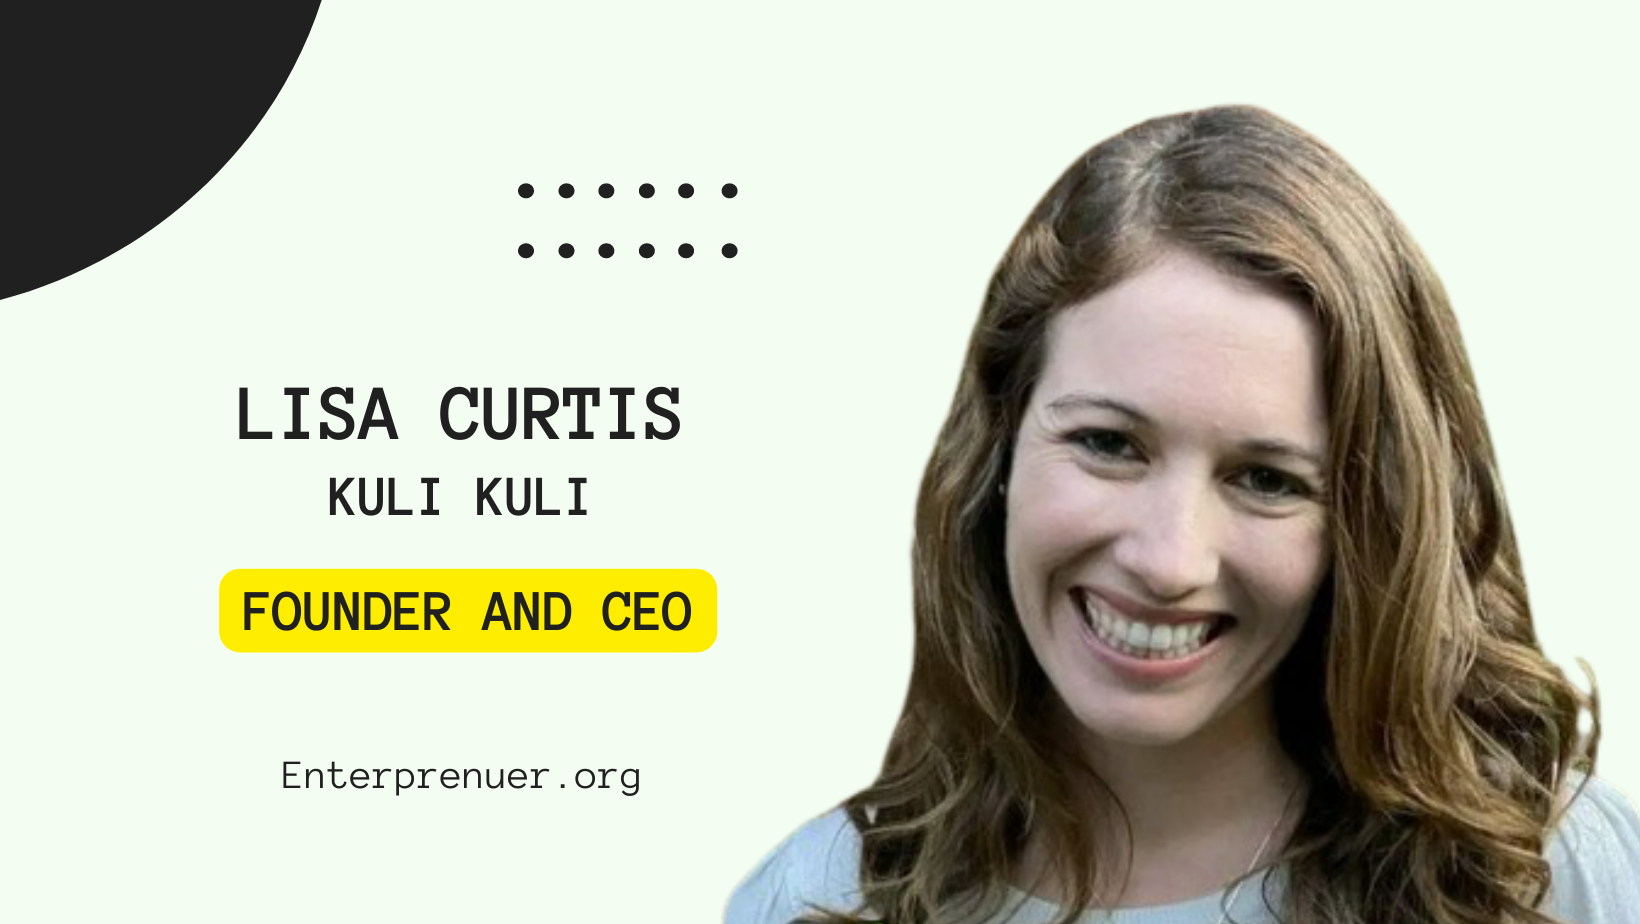 Lisa Curtis Founder of Kuli Kuli